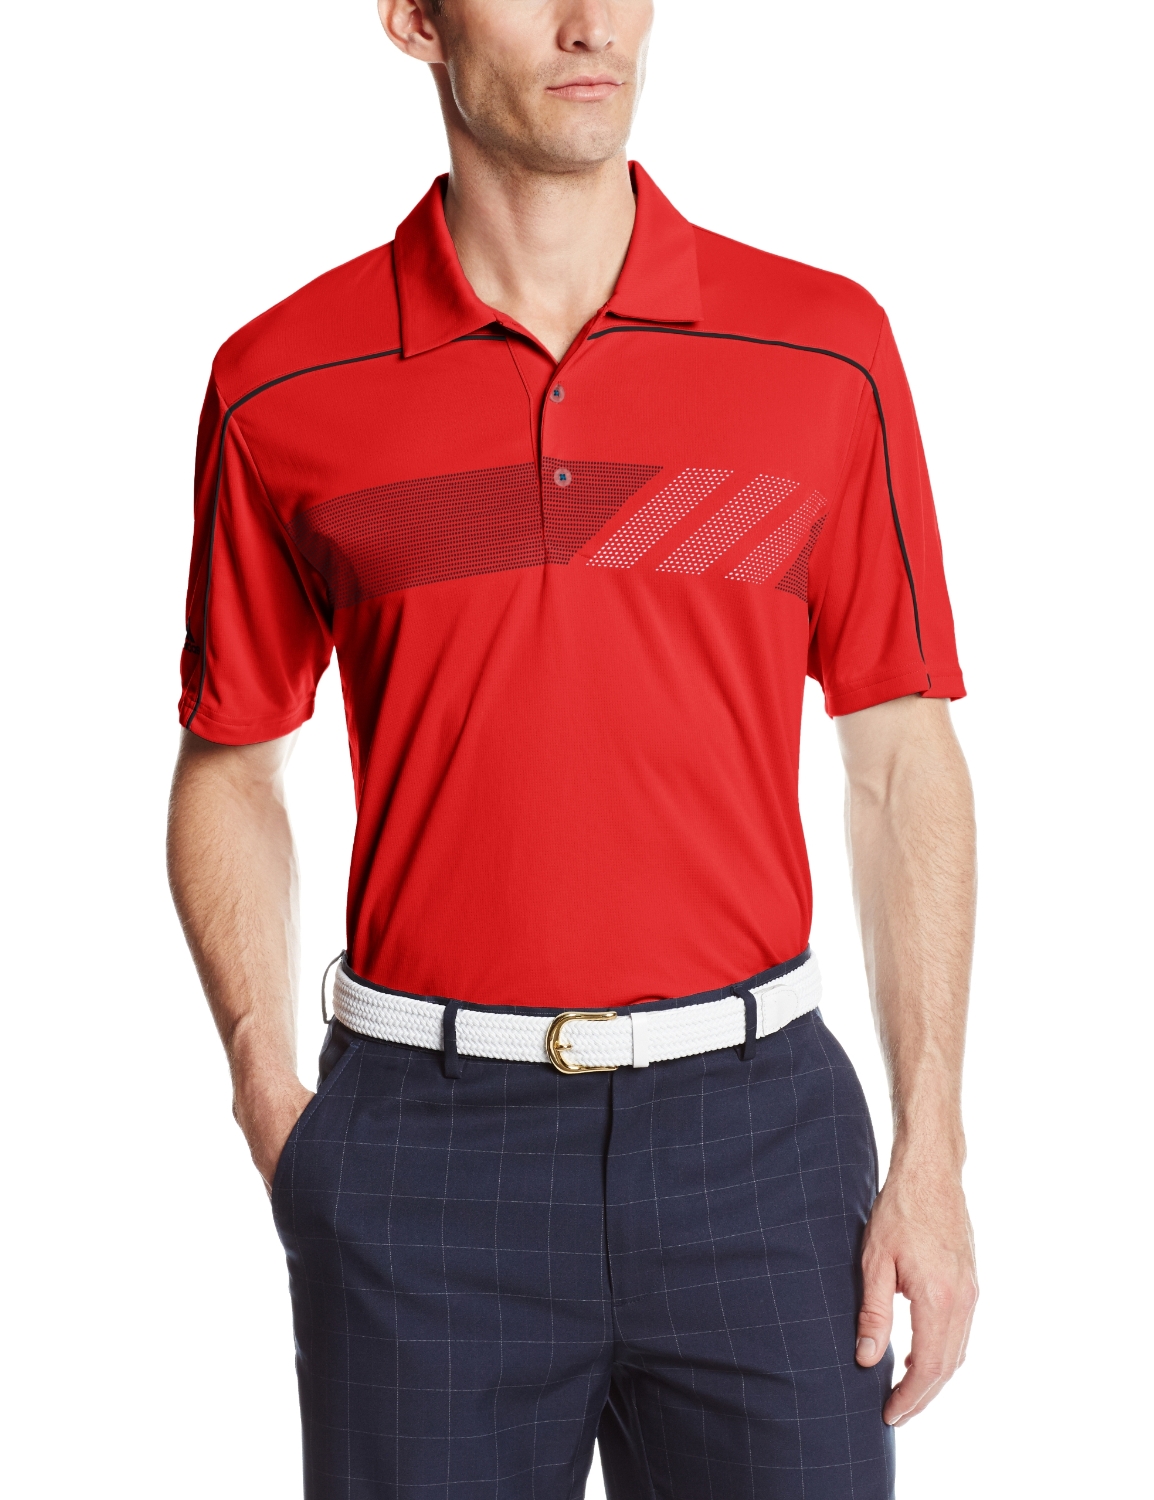 Mens Adidas Climachill Print Golf Polo Shirts